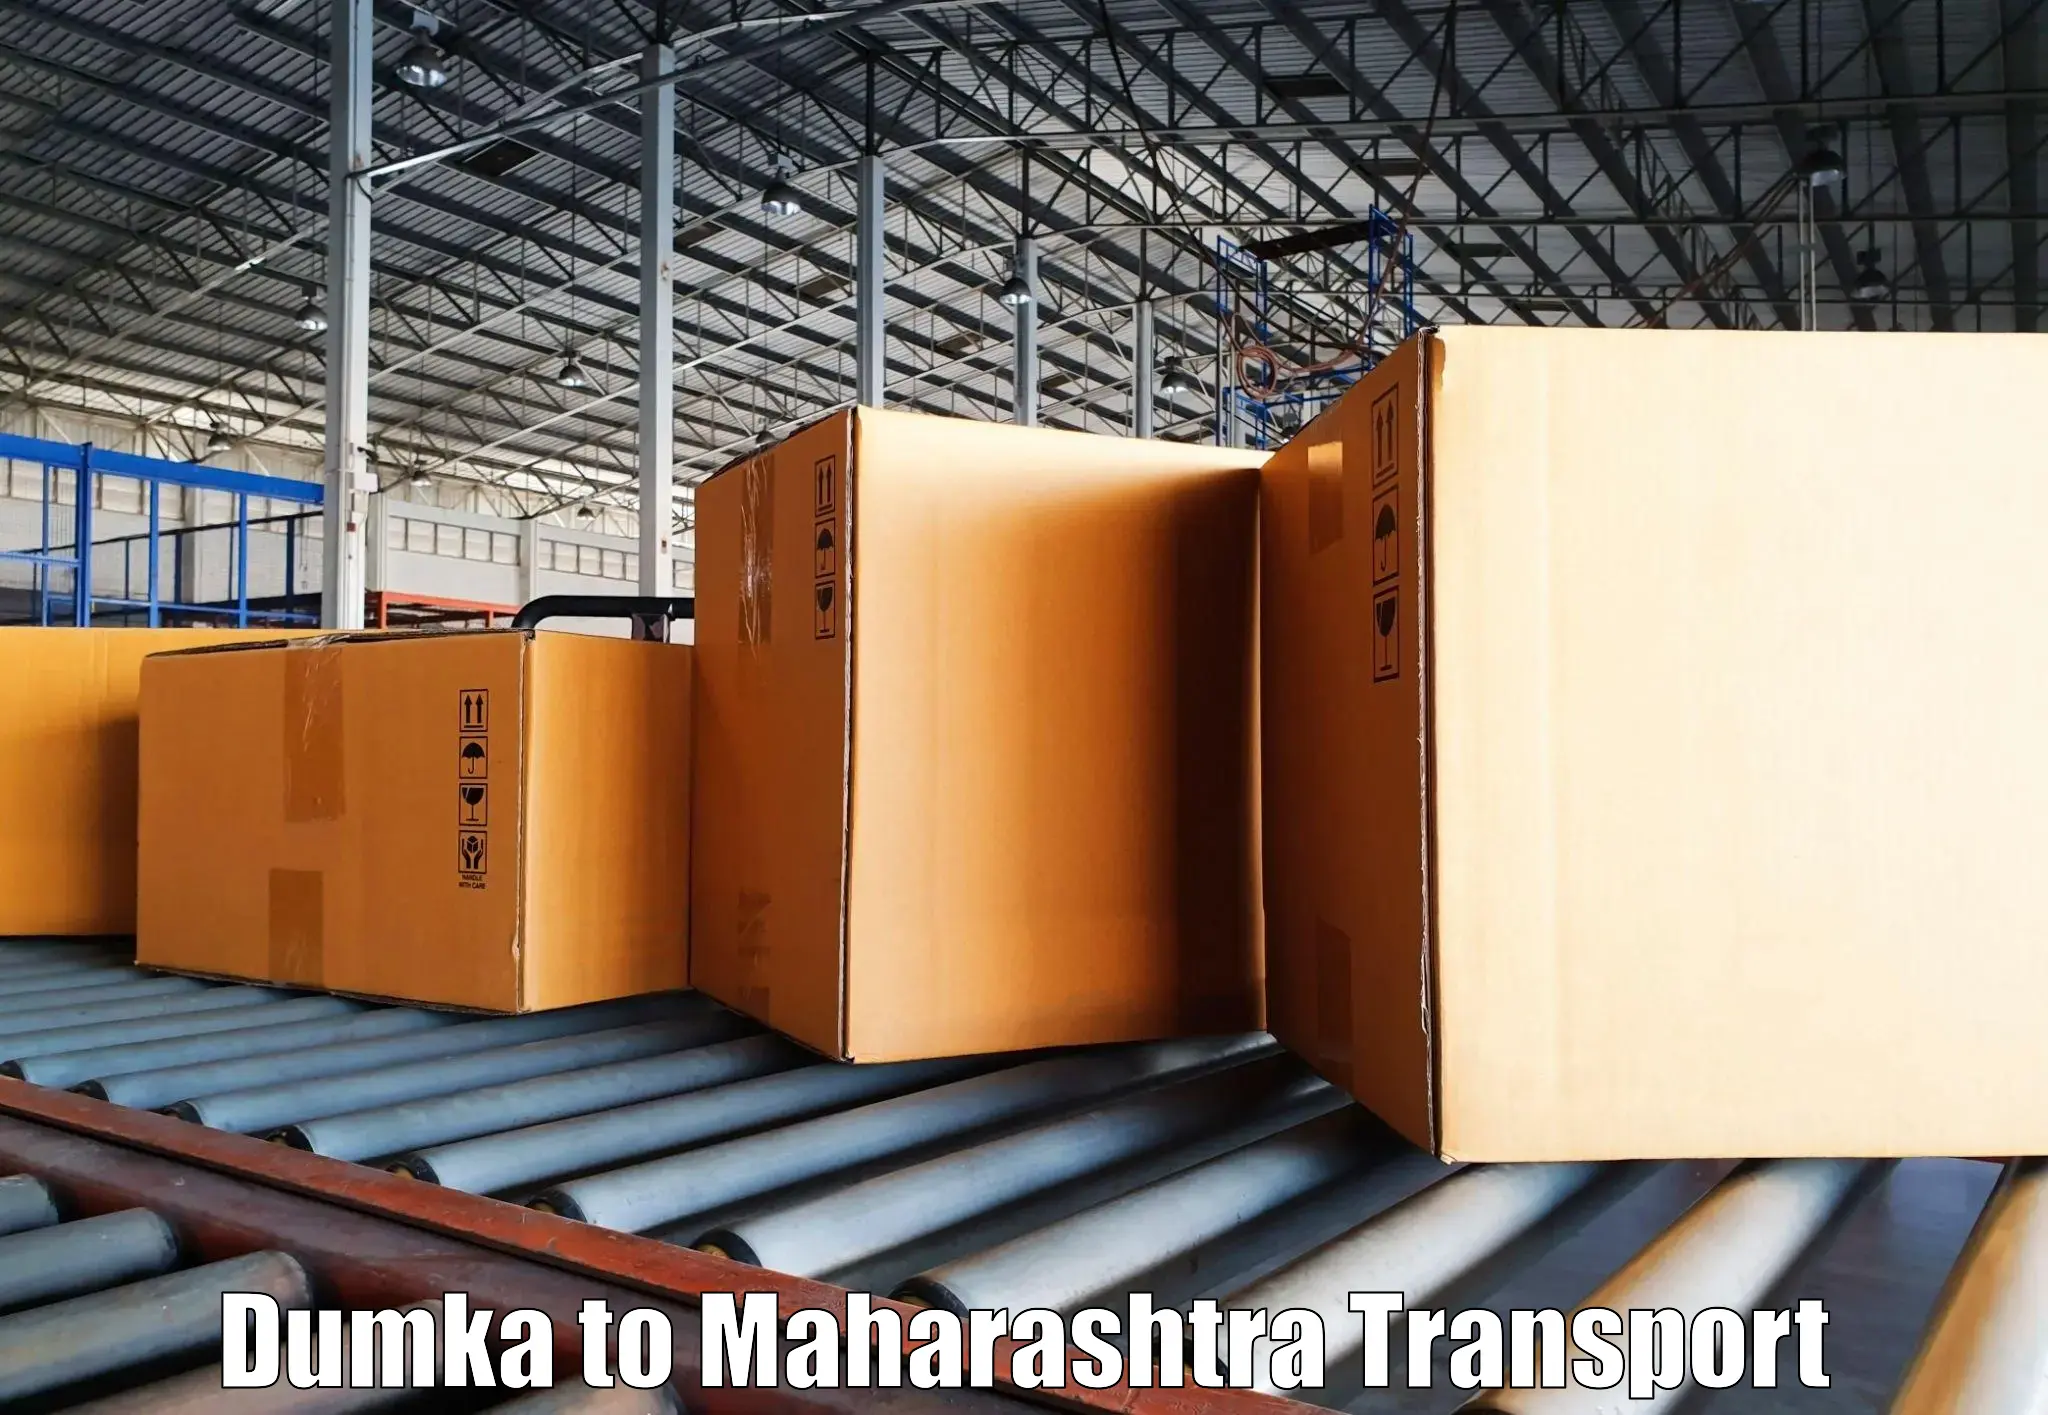 Truck transport companies in India Dumka to Borivali